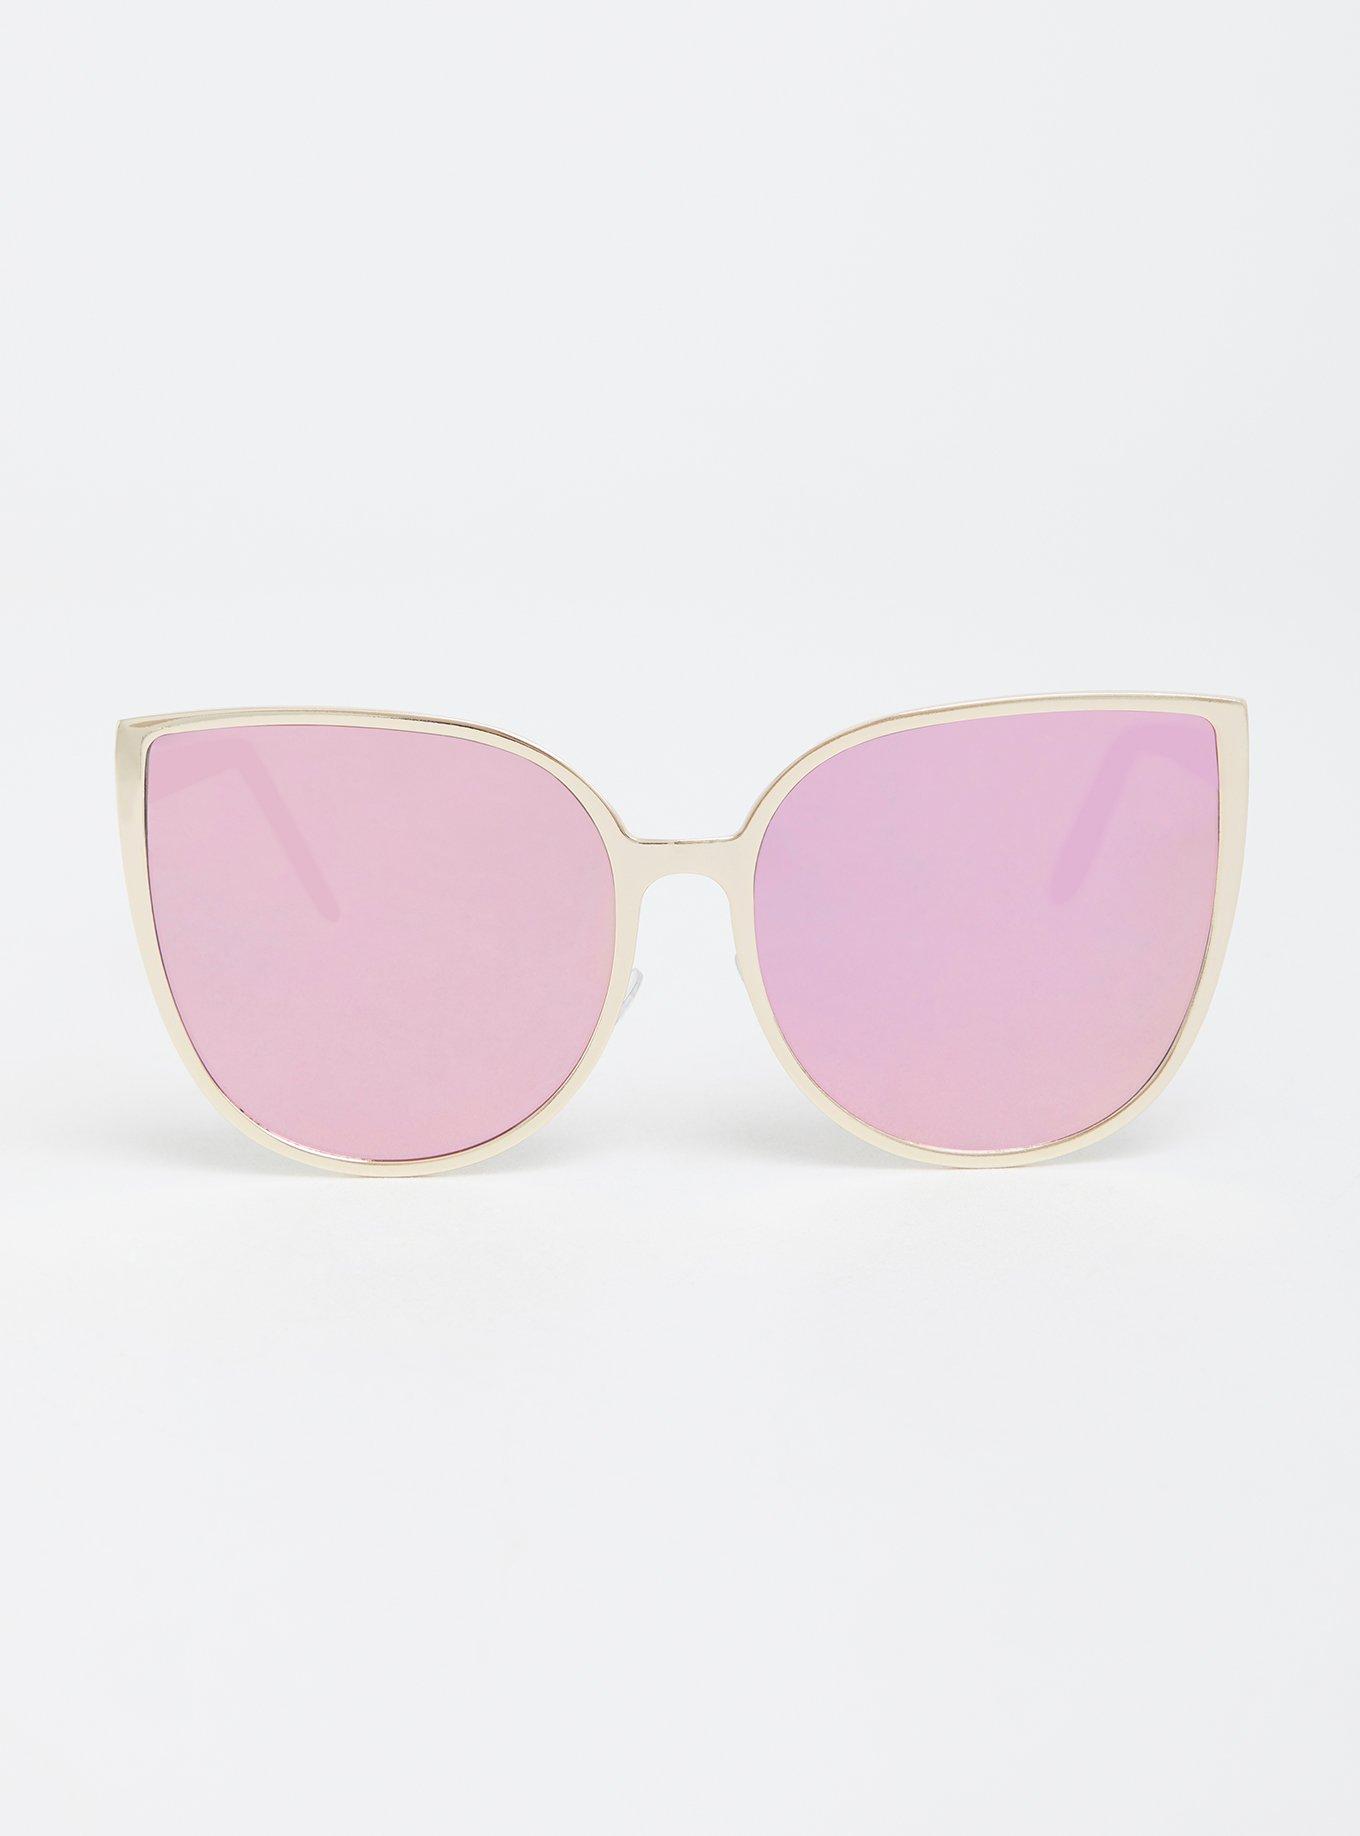 Plus Size - Gold-tone Cat Eye Sunglasses - Torrid